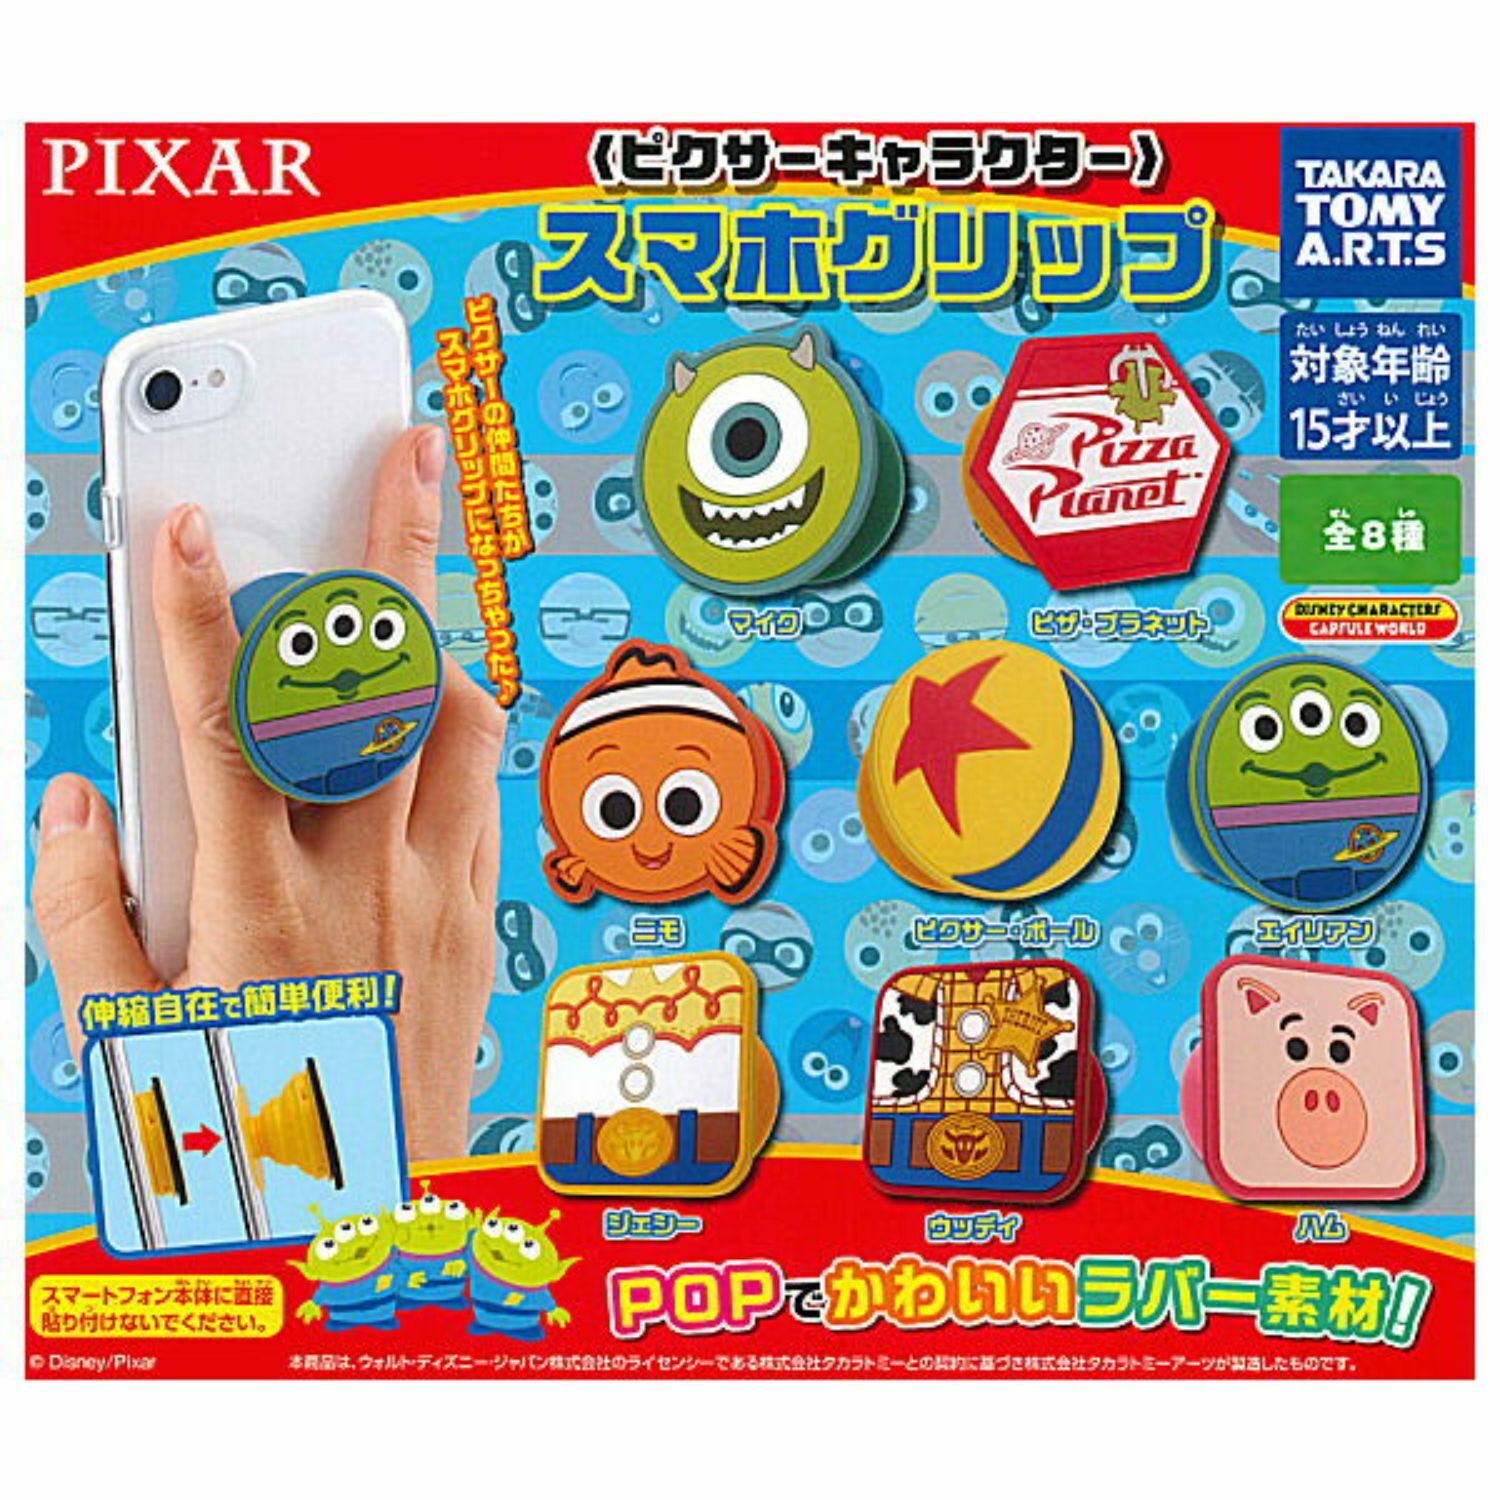 Pixar character Smartphone grip Capsule Toy 8 Types Full Comp Set Gacha alien